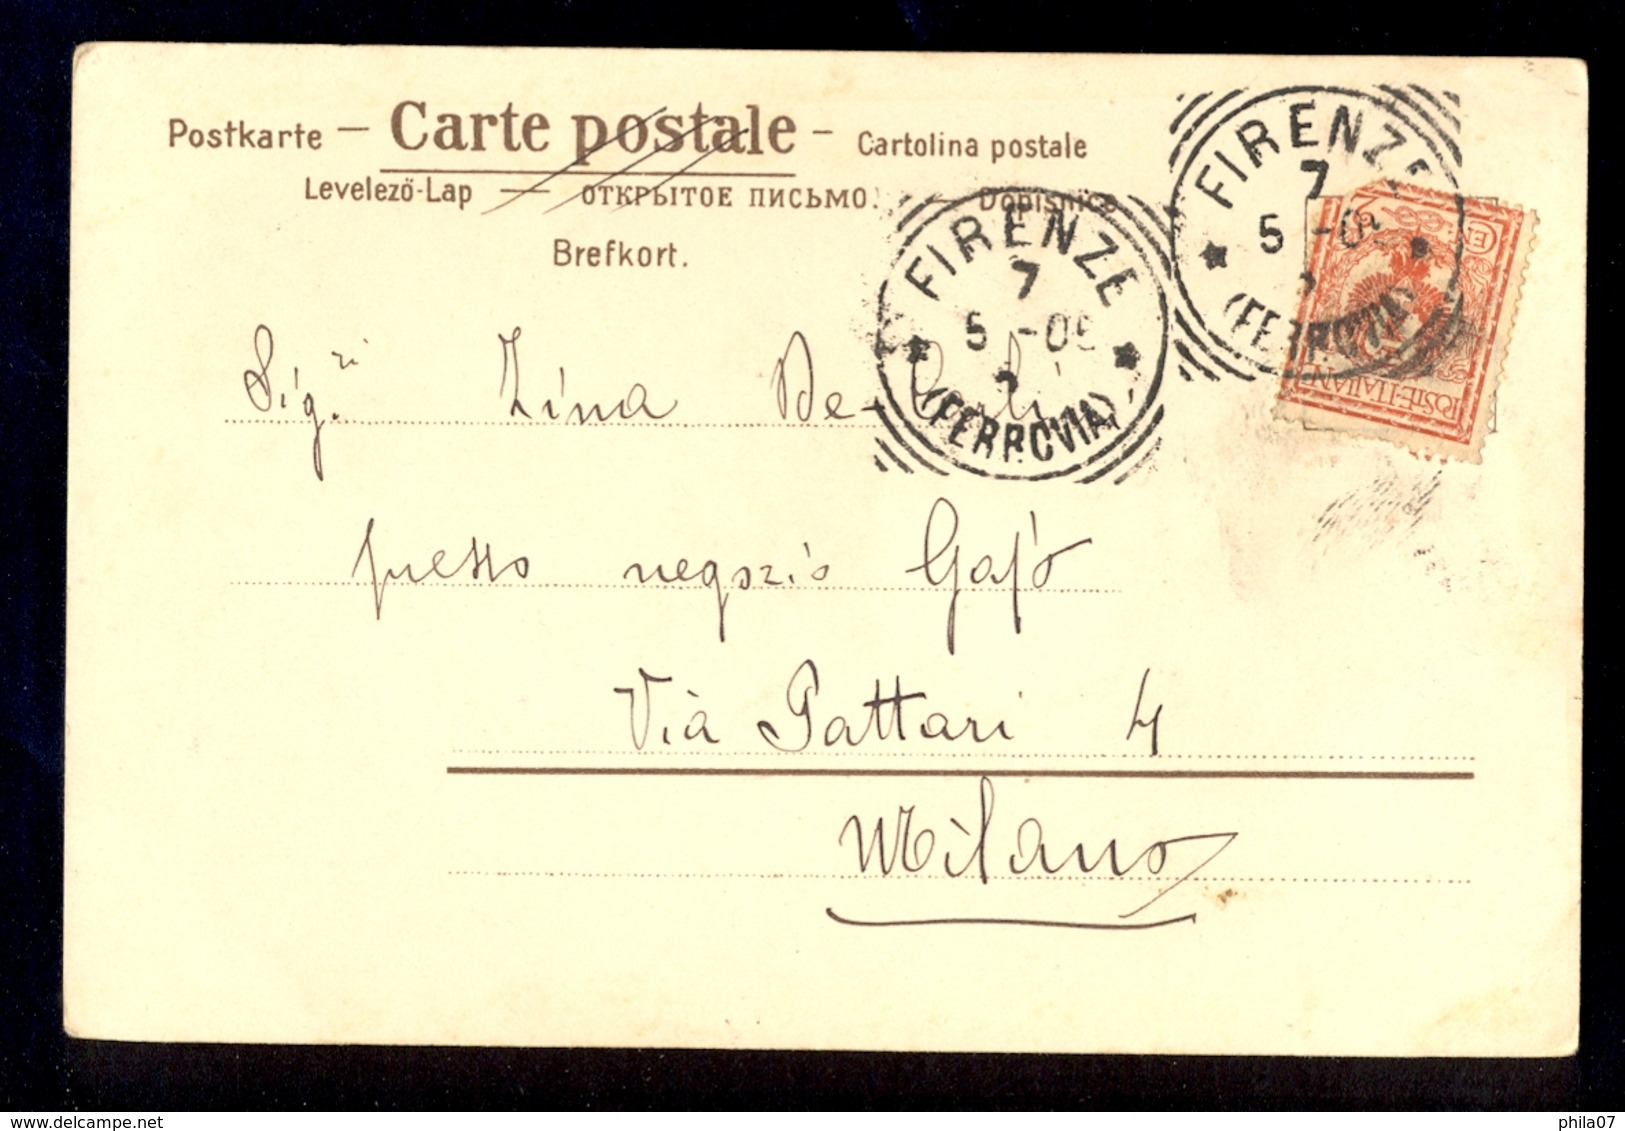 Ethel Parkinson / Ed No. 126 / Long Line Circulated Postcard 2 Scans - Parkinson, Ethel